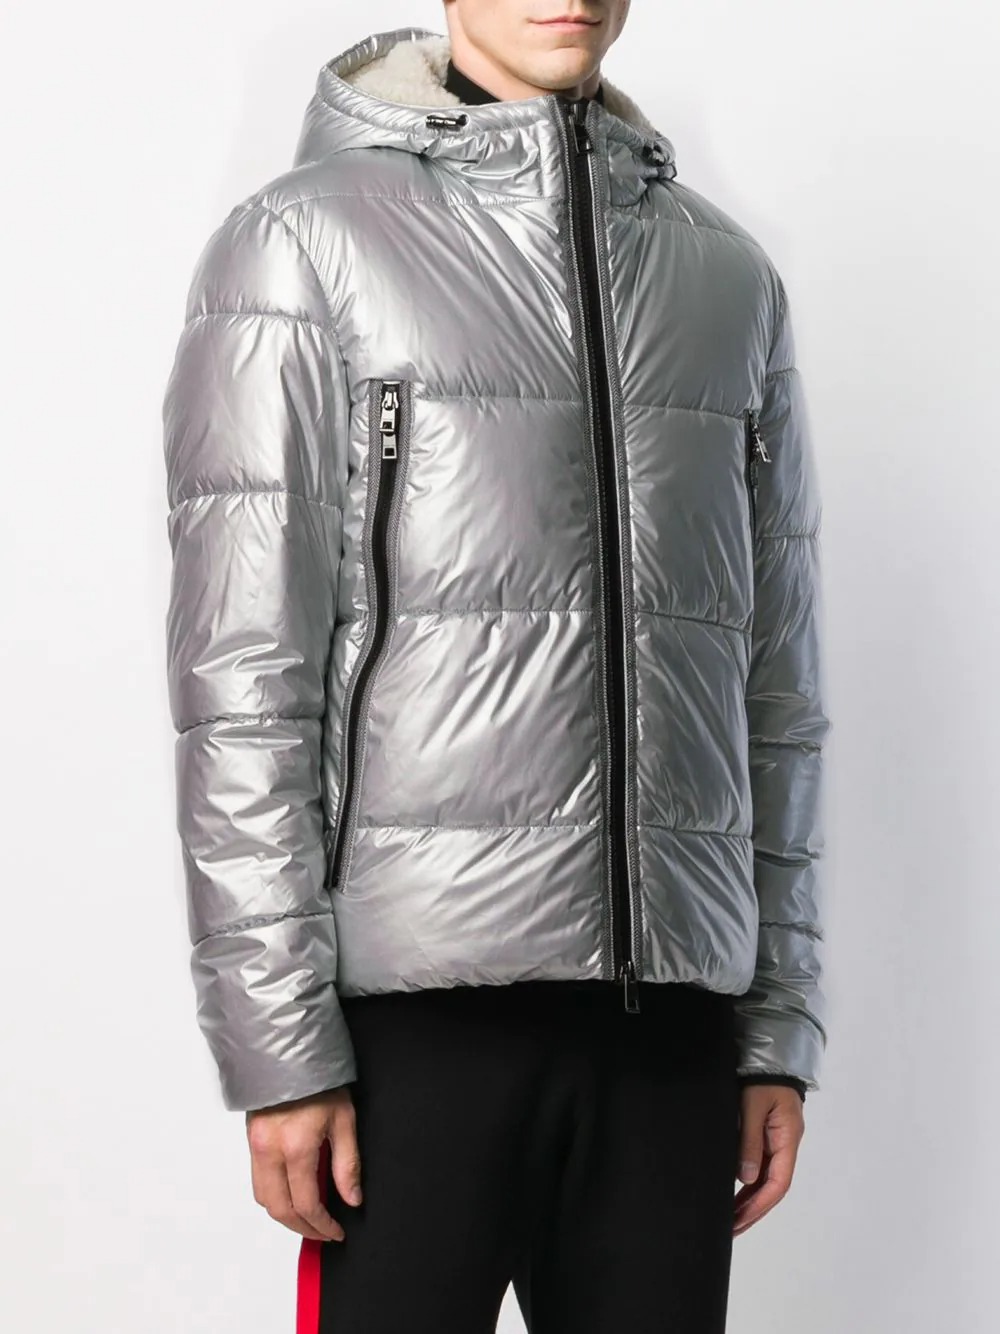 Michael Kors SILVER Metallic Puffer Jacket, US Small - image 3 of 9